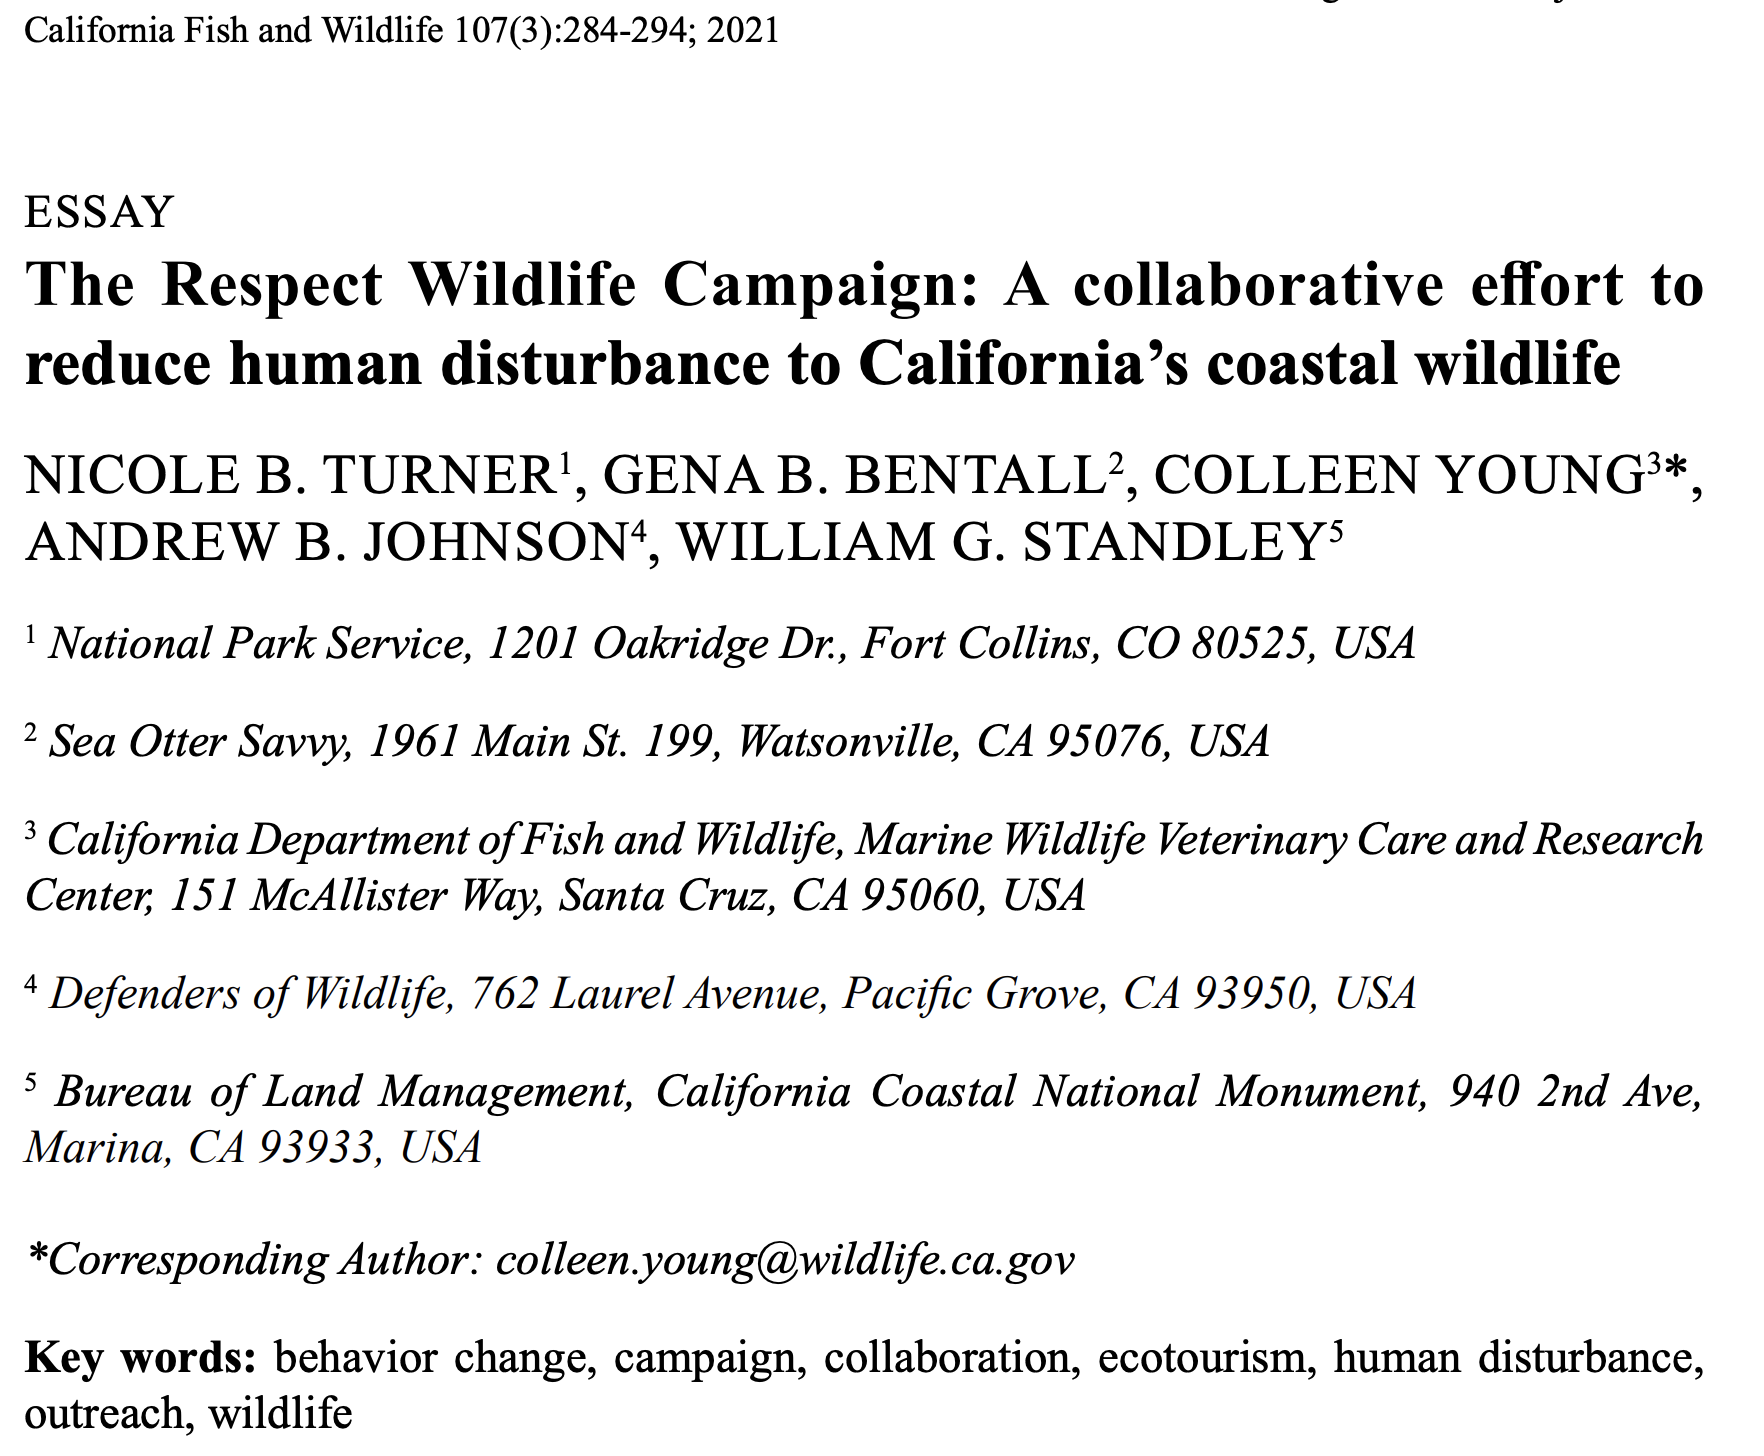 The Respect Wildlife Campaign: A collaborative effort to reduce human disturbance to California’s coastal wildlife